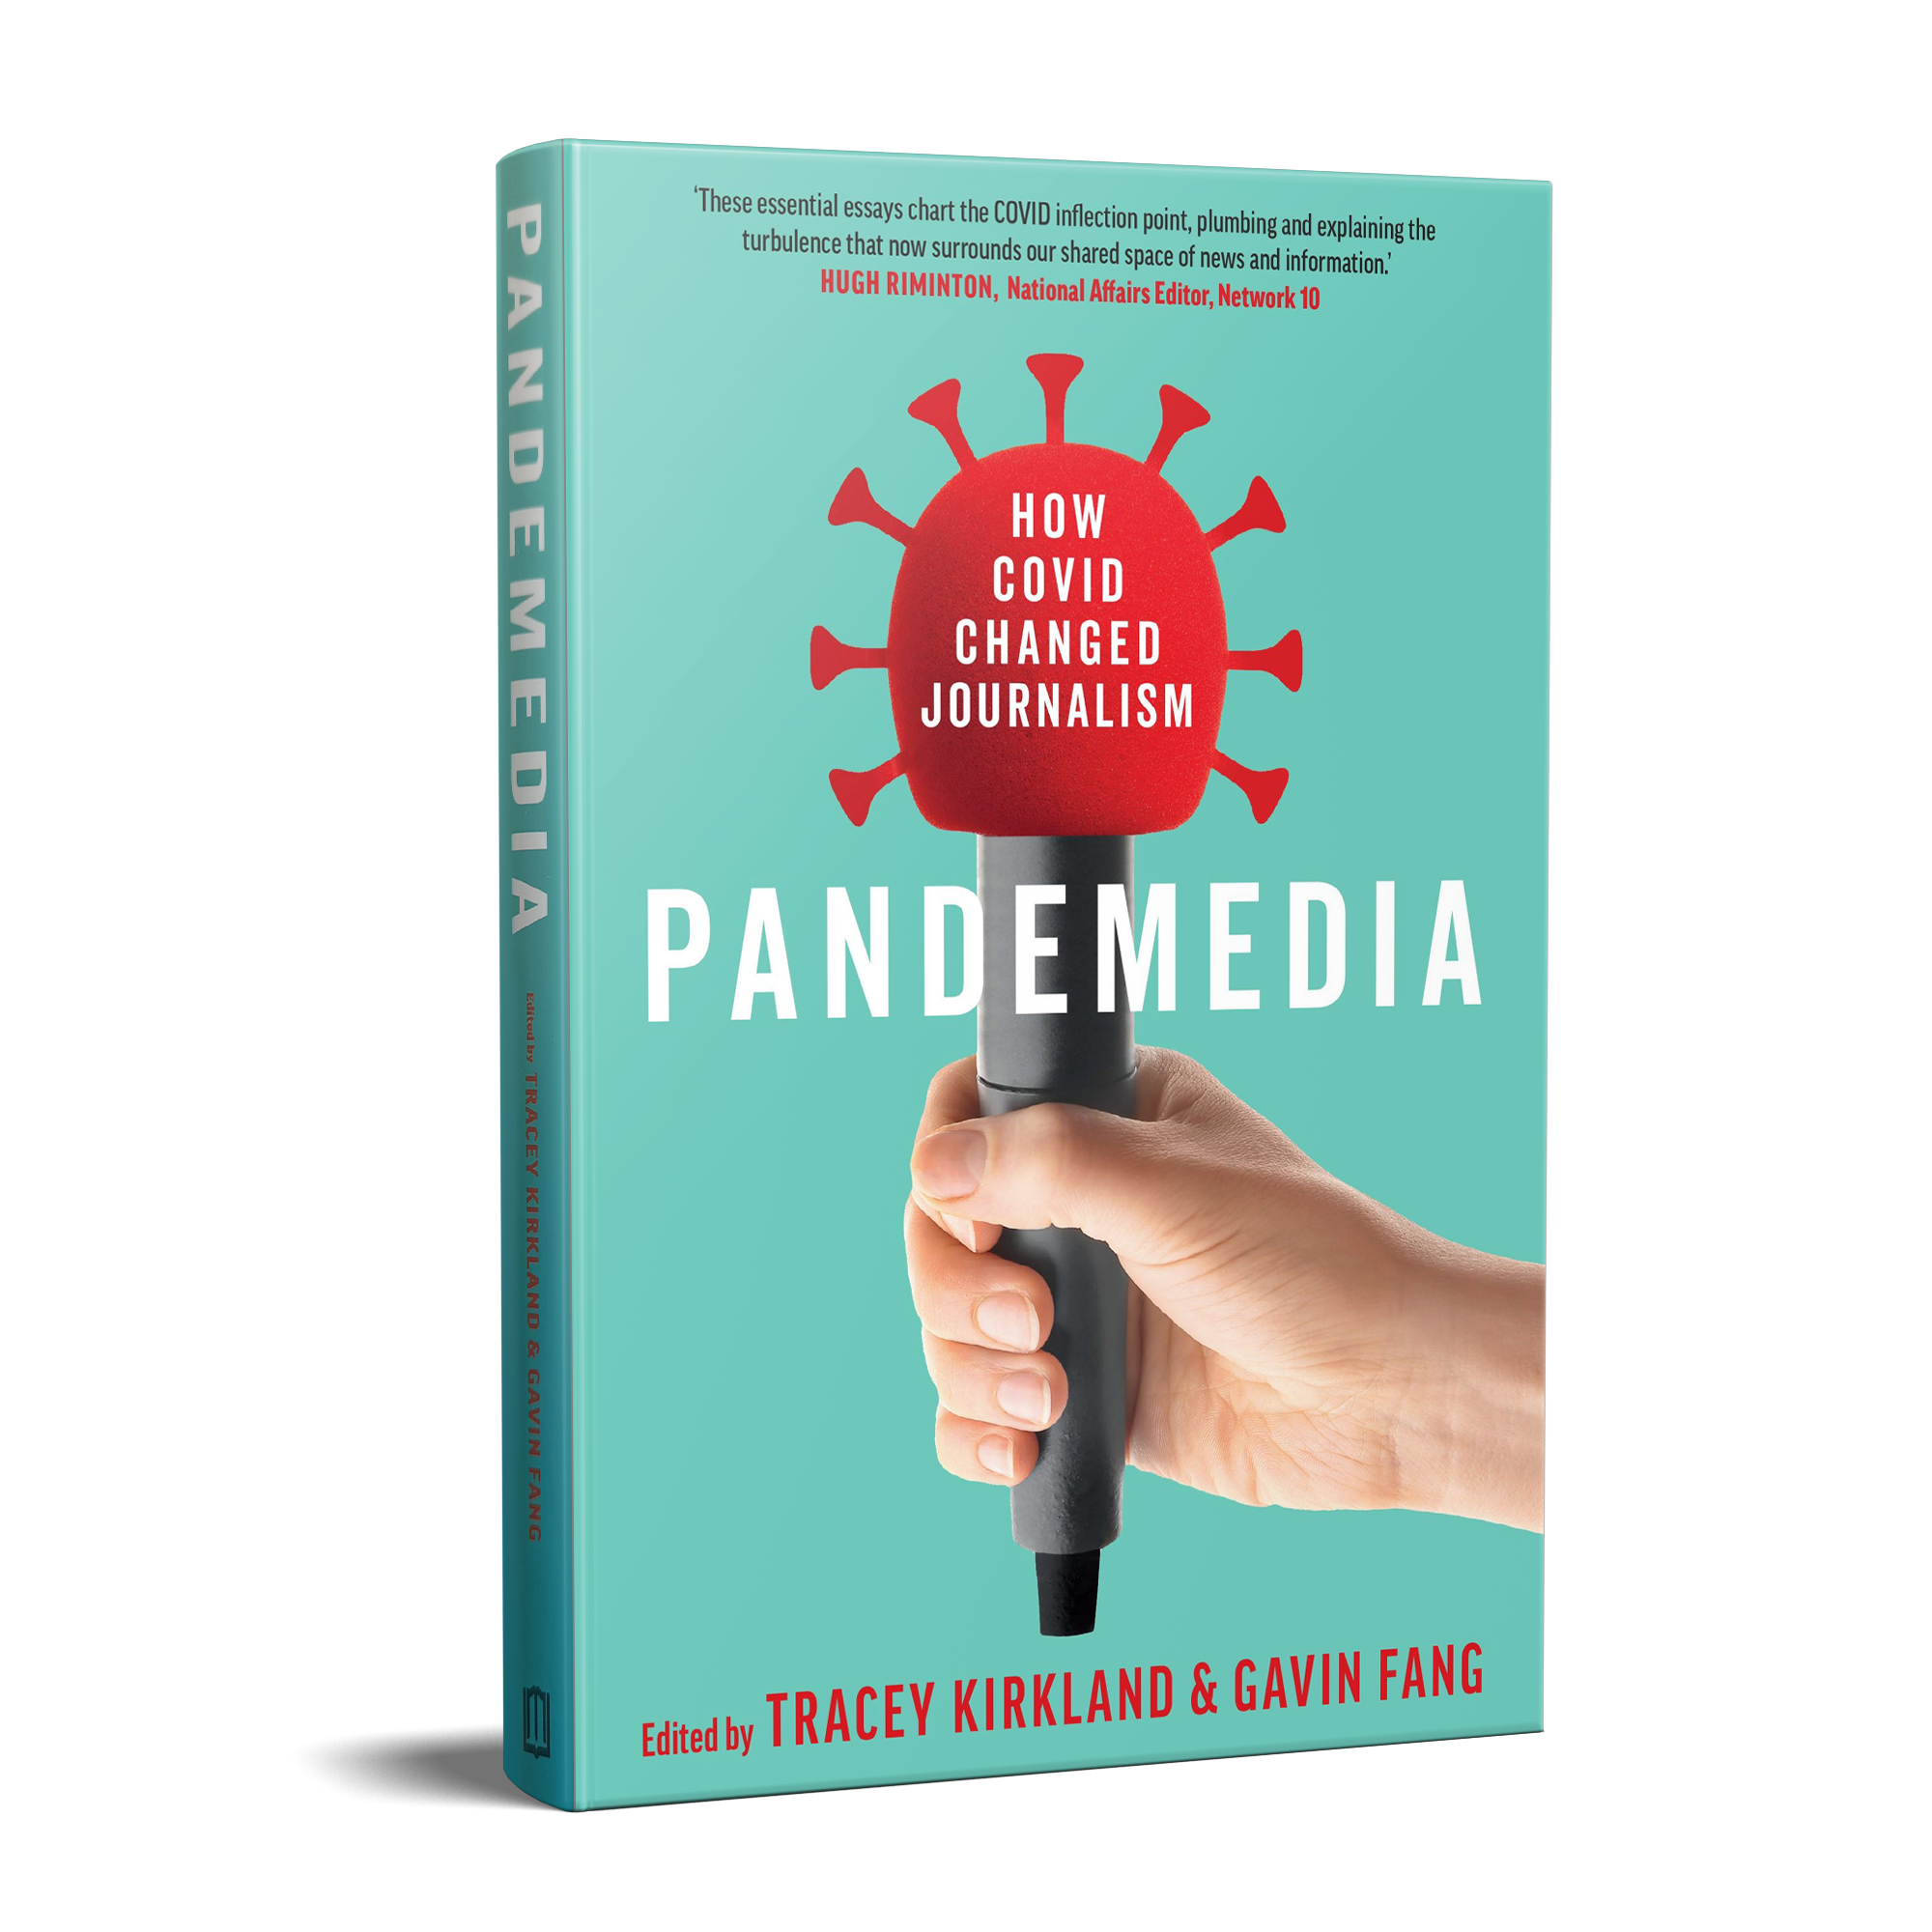 Pandemedia 3D cover